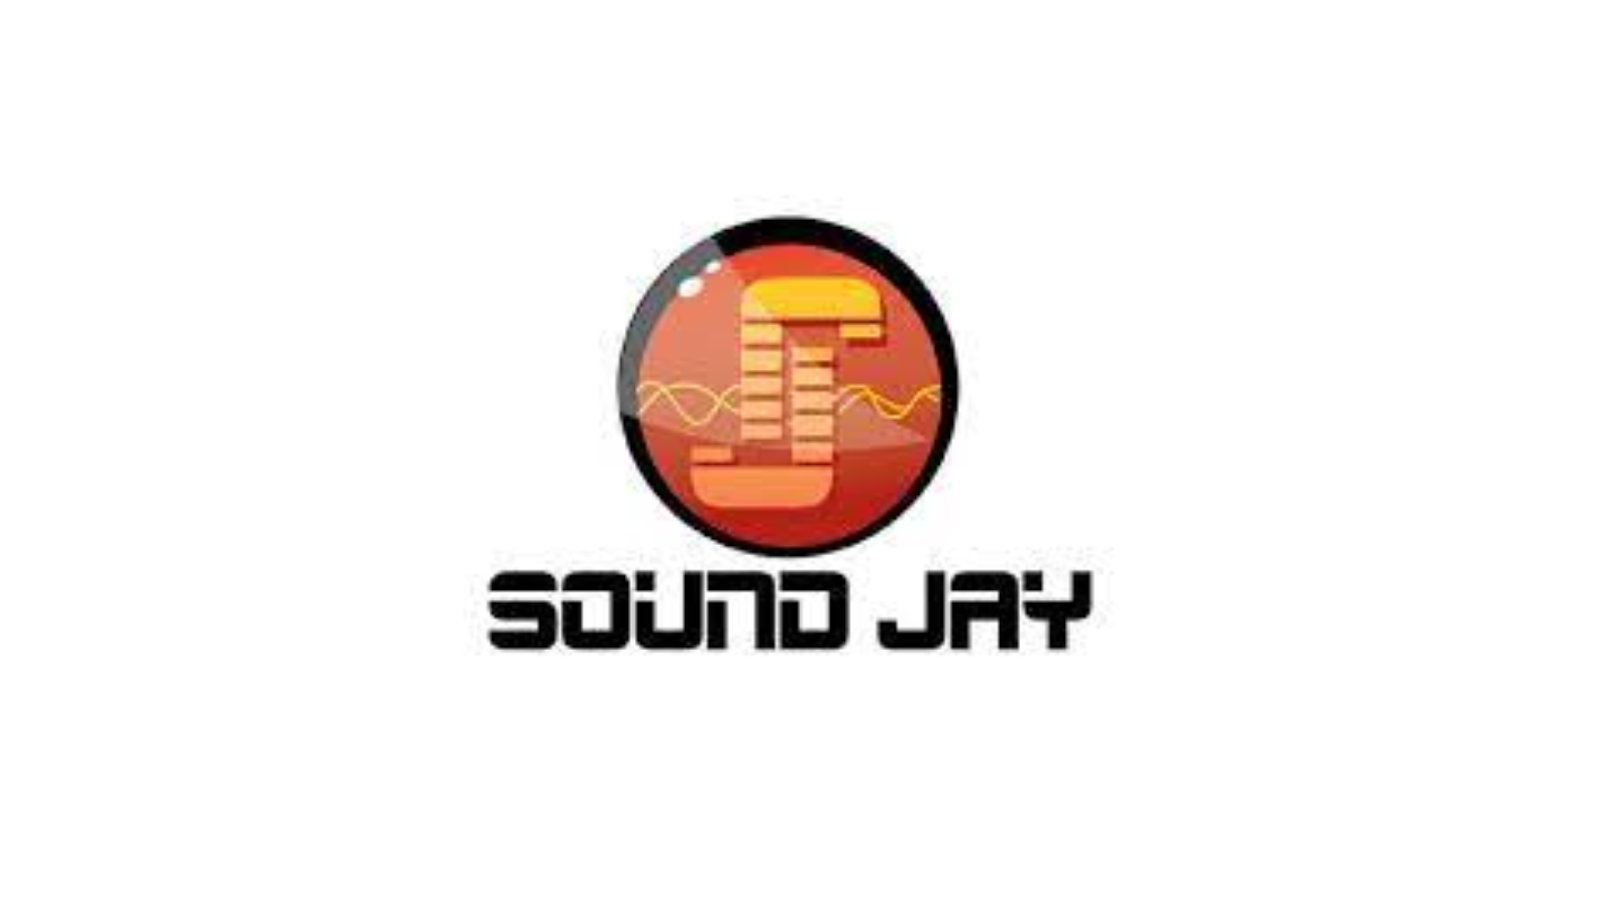 soundjay free sound effects site